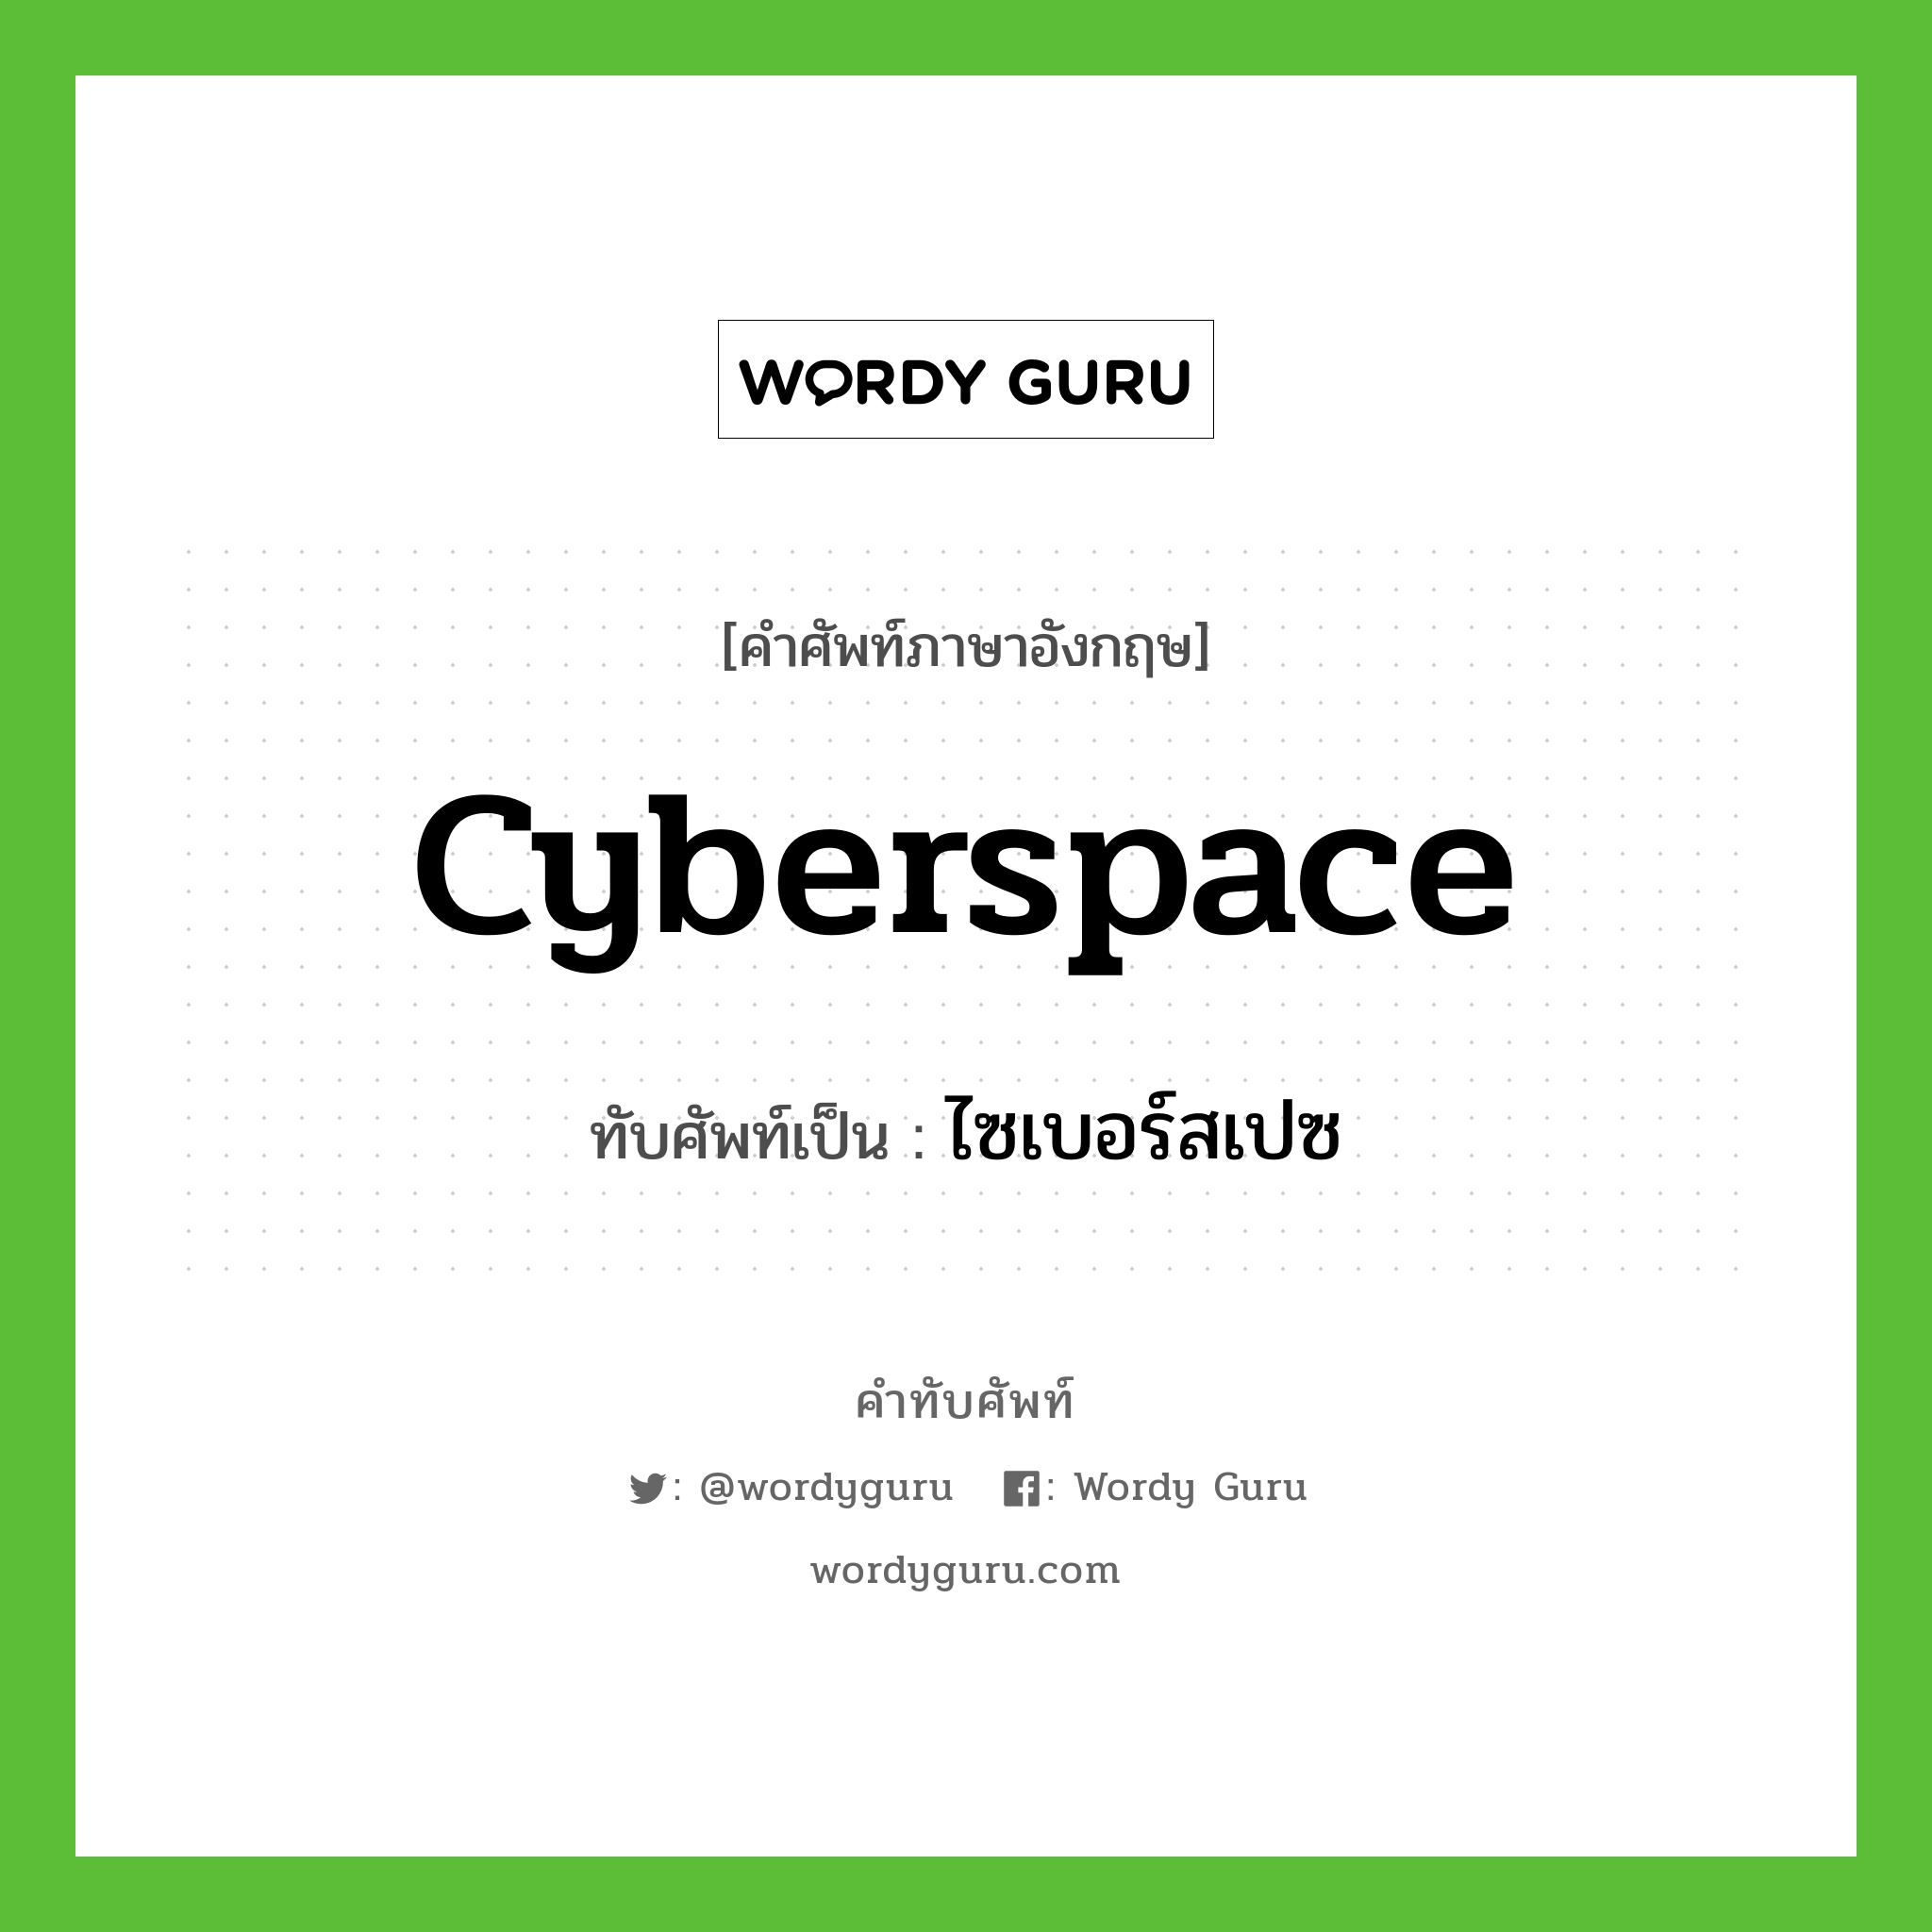 cyberspace เขียนเป็นคำไทยว่าอะไร?, คำศัพท์ภาษาอังกฤษ cyberspace ทับศัพท์เป็น ไซเบอร์สเปซ